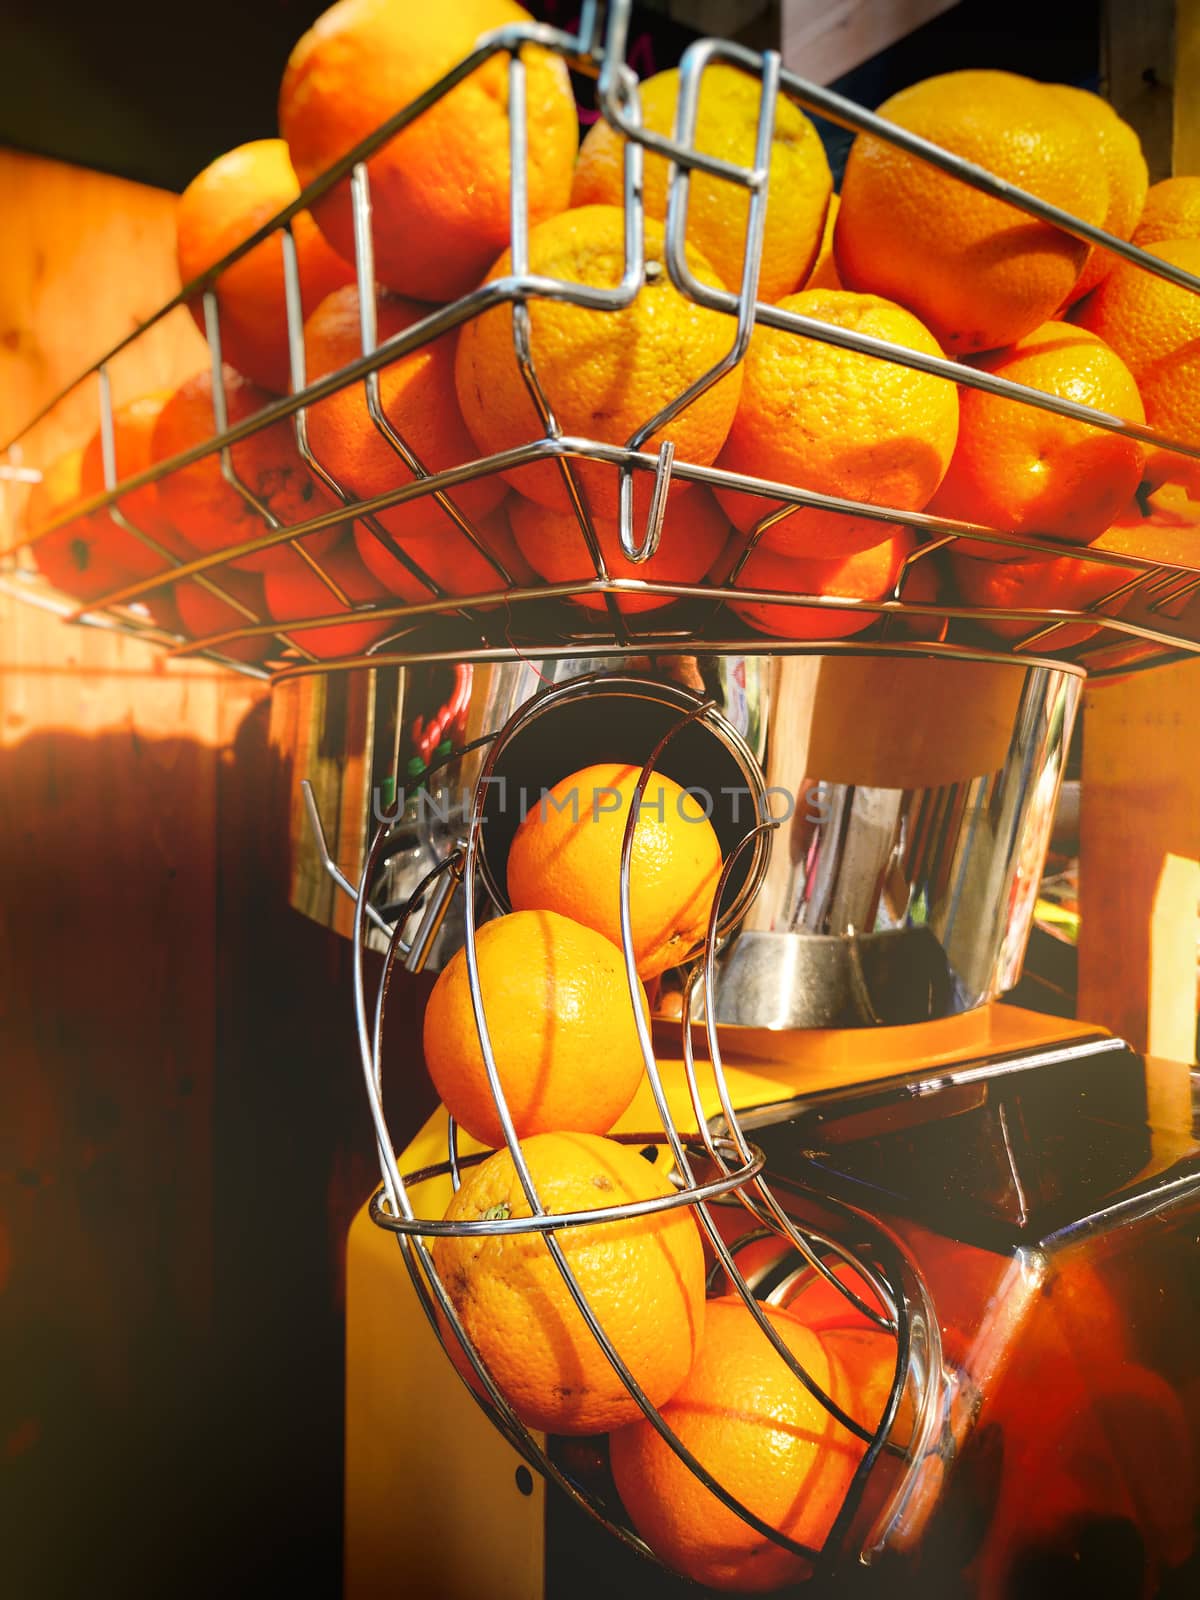 orange juice machine squeezer industry by LucaLorenzelli